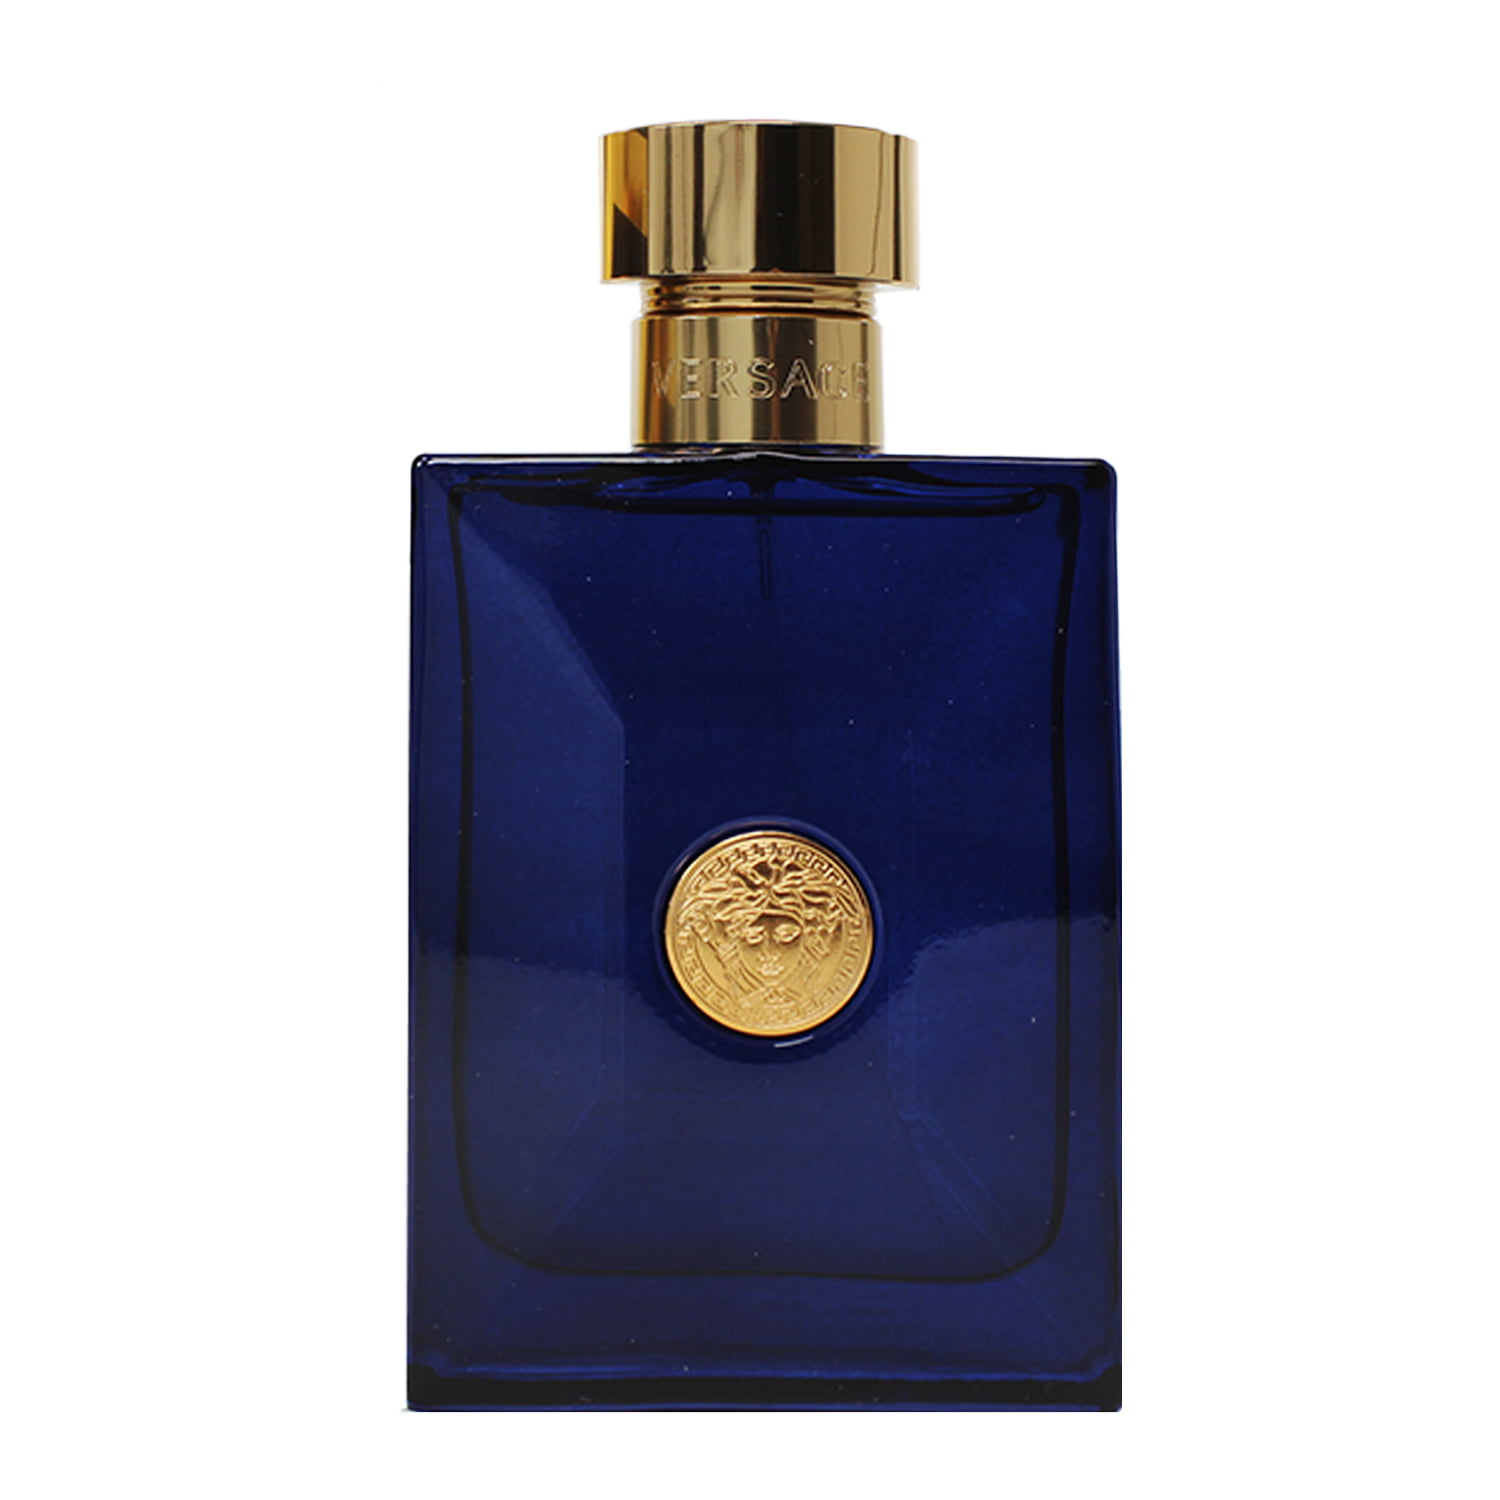 Versace Dylan Blue 3.4 EDT Men Perfume – Lexor Miami